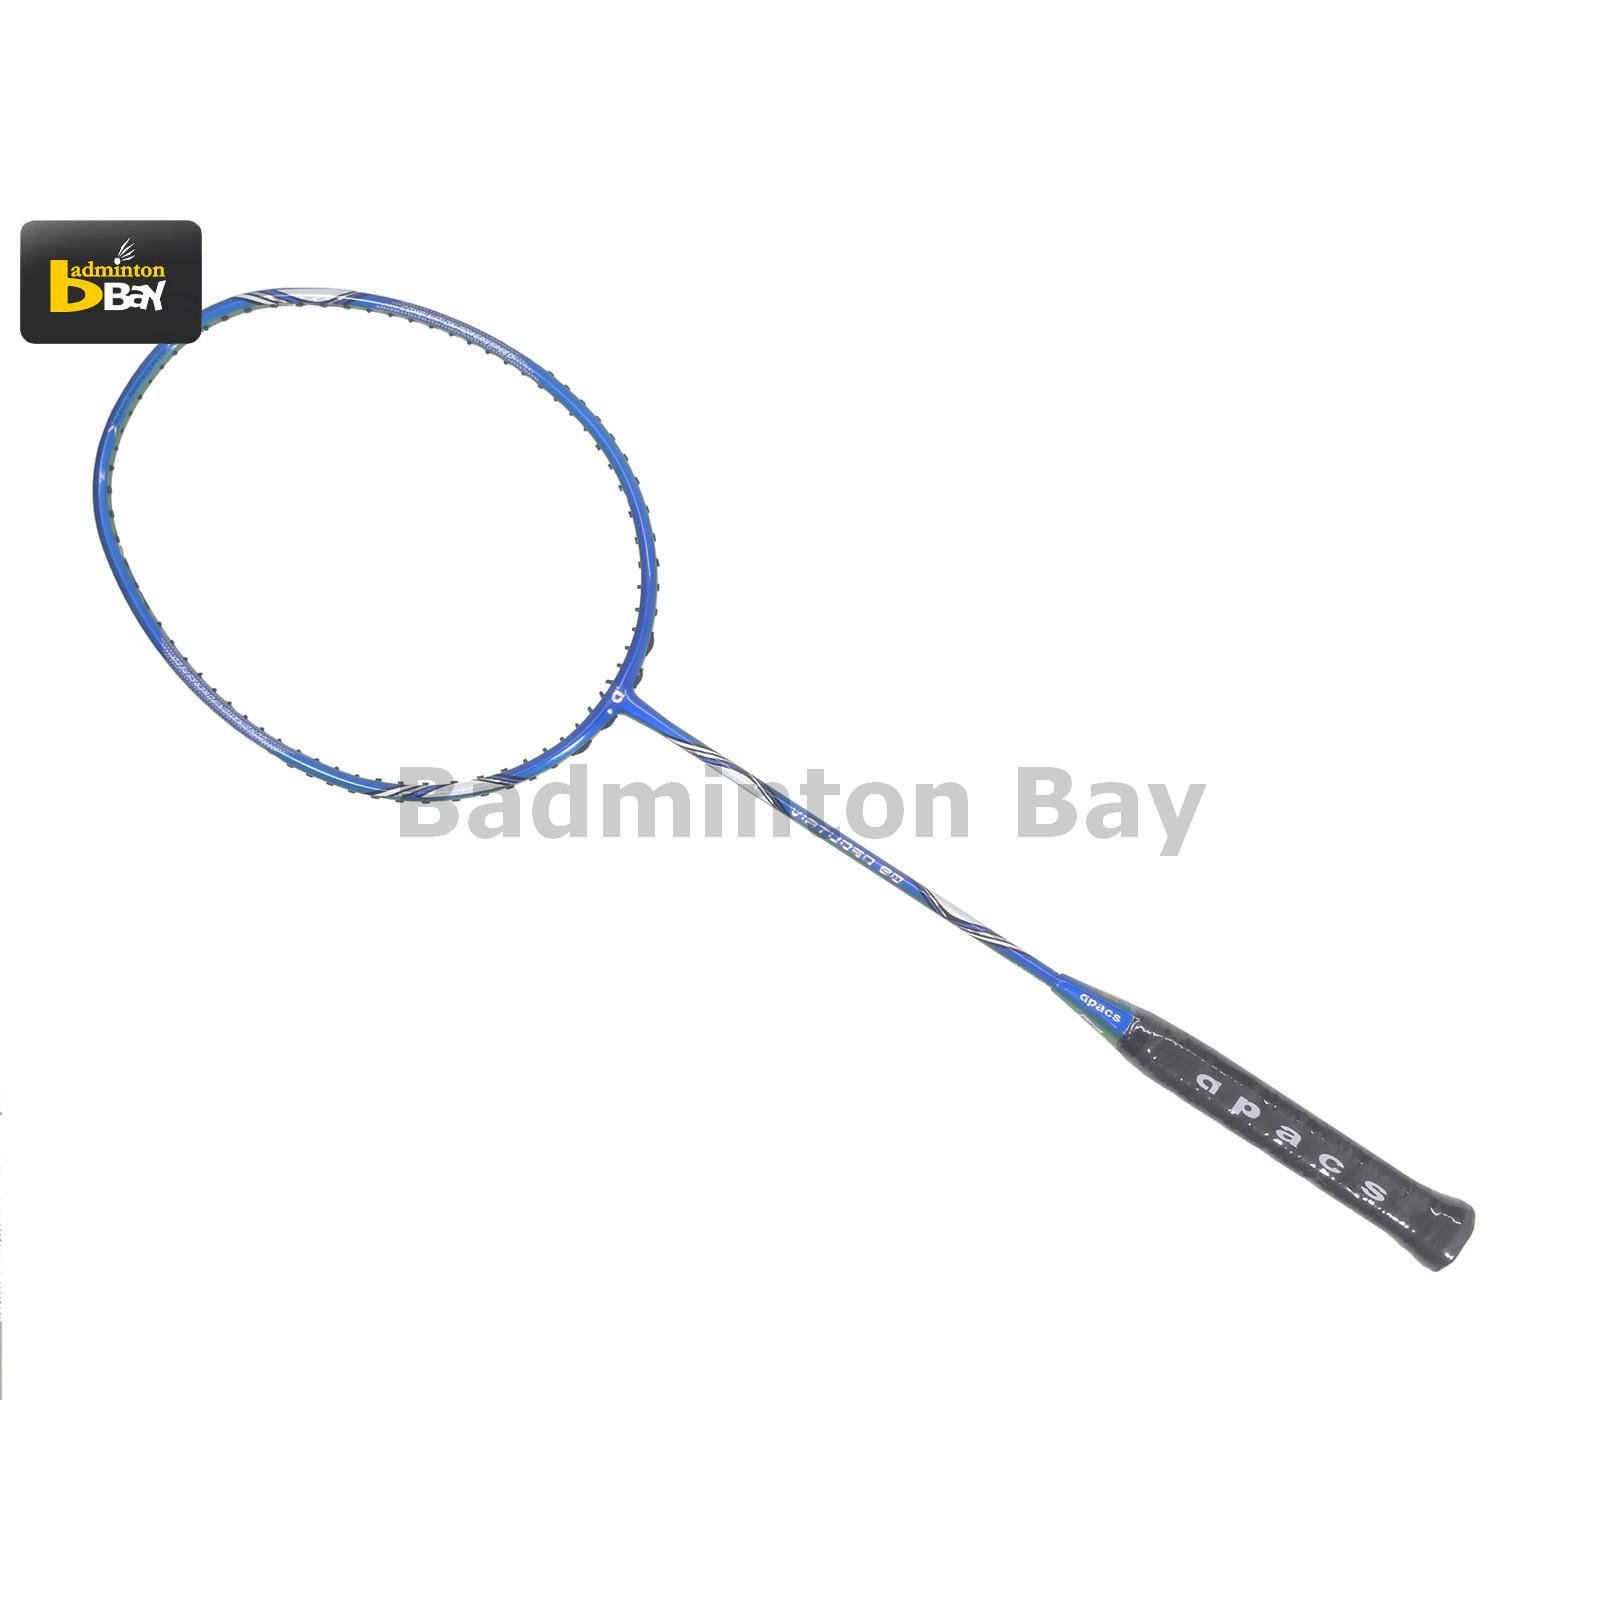 Apacs Virtuoso 90 Badminton Racket (6U)